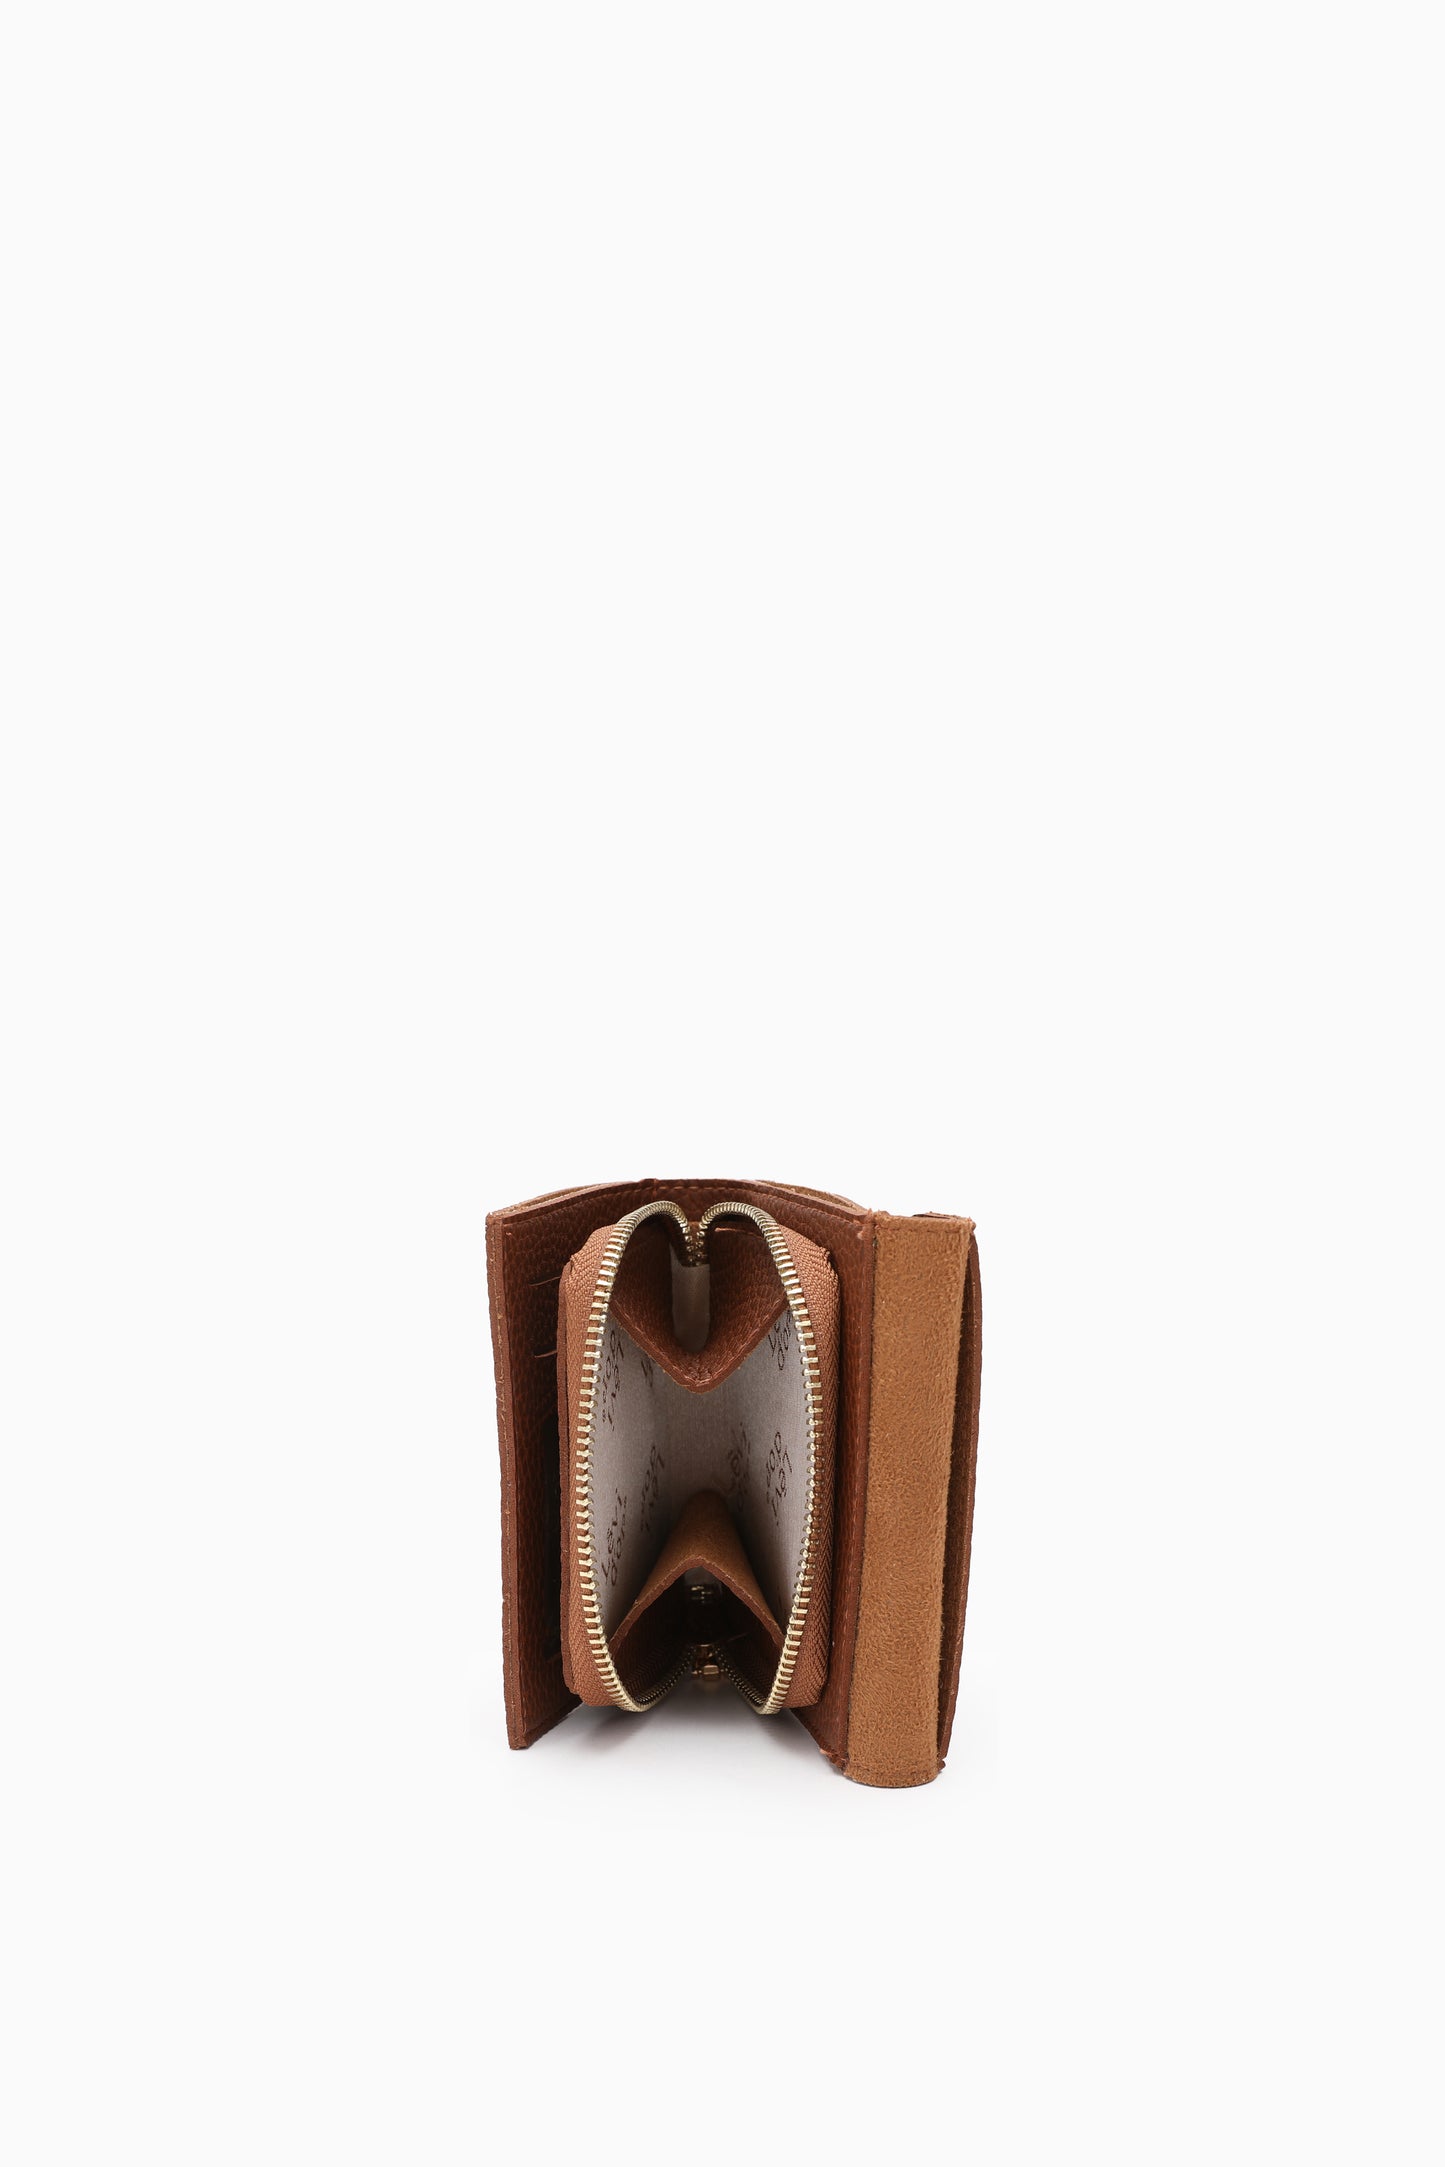 Card wallet- 21037 - Brown - bakkaclothing